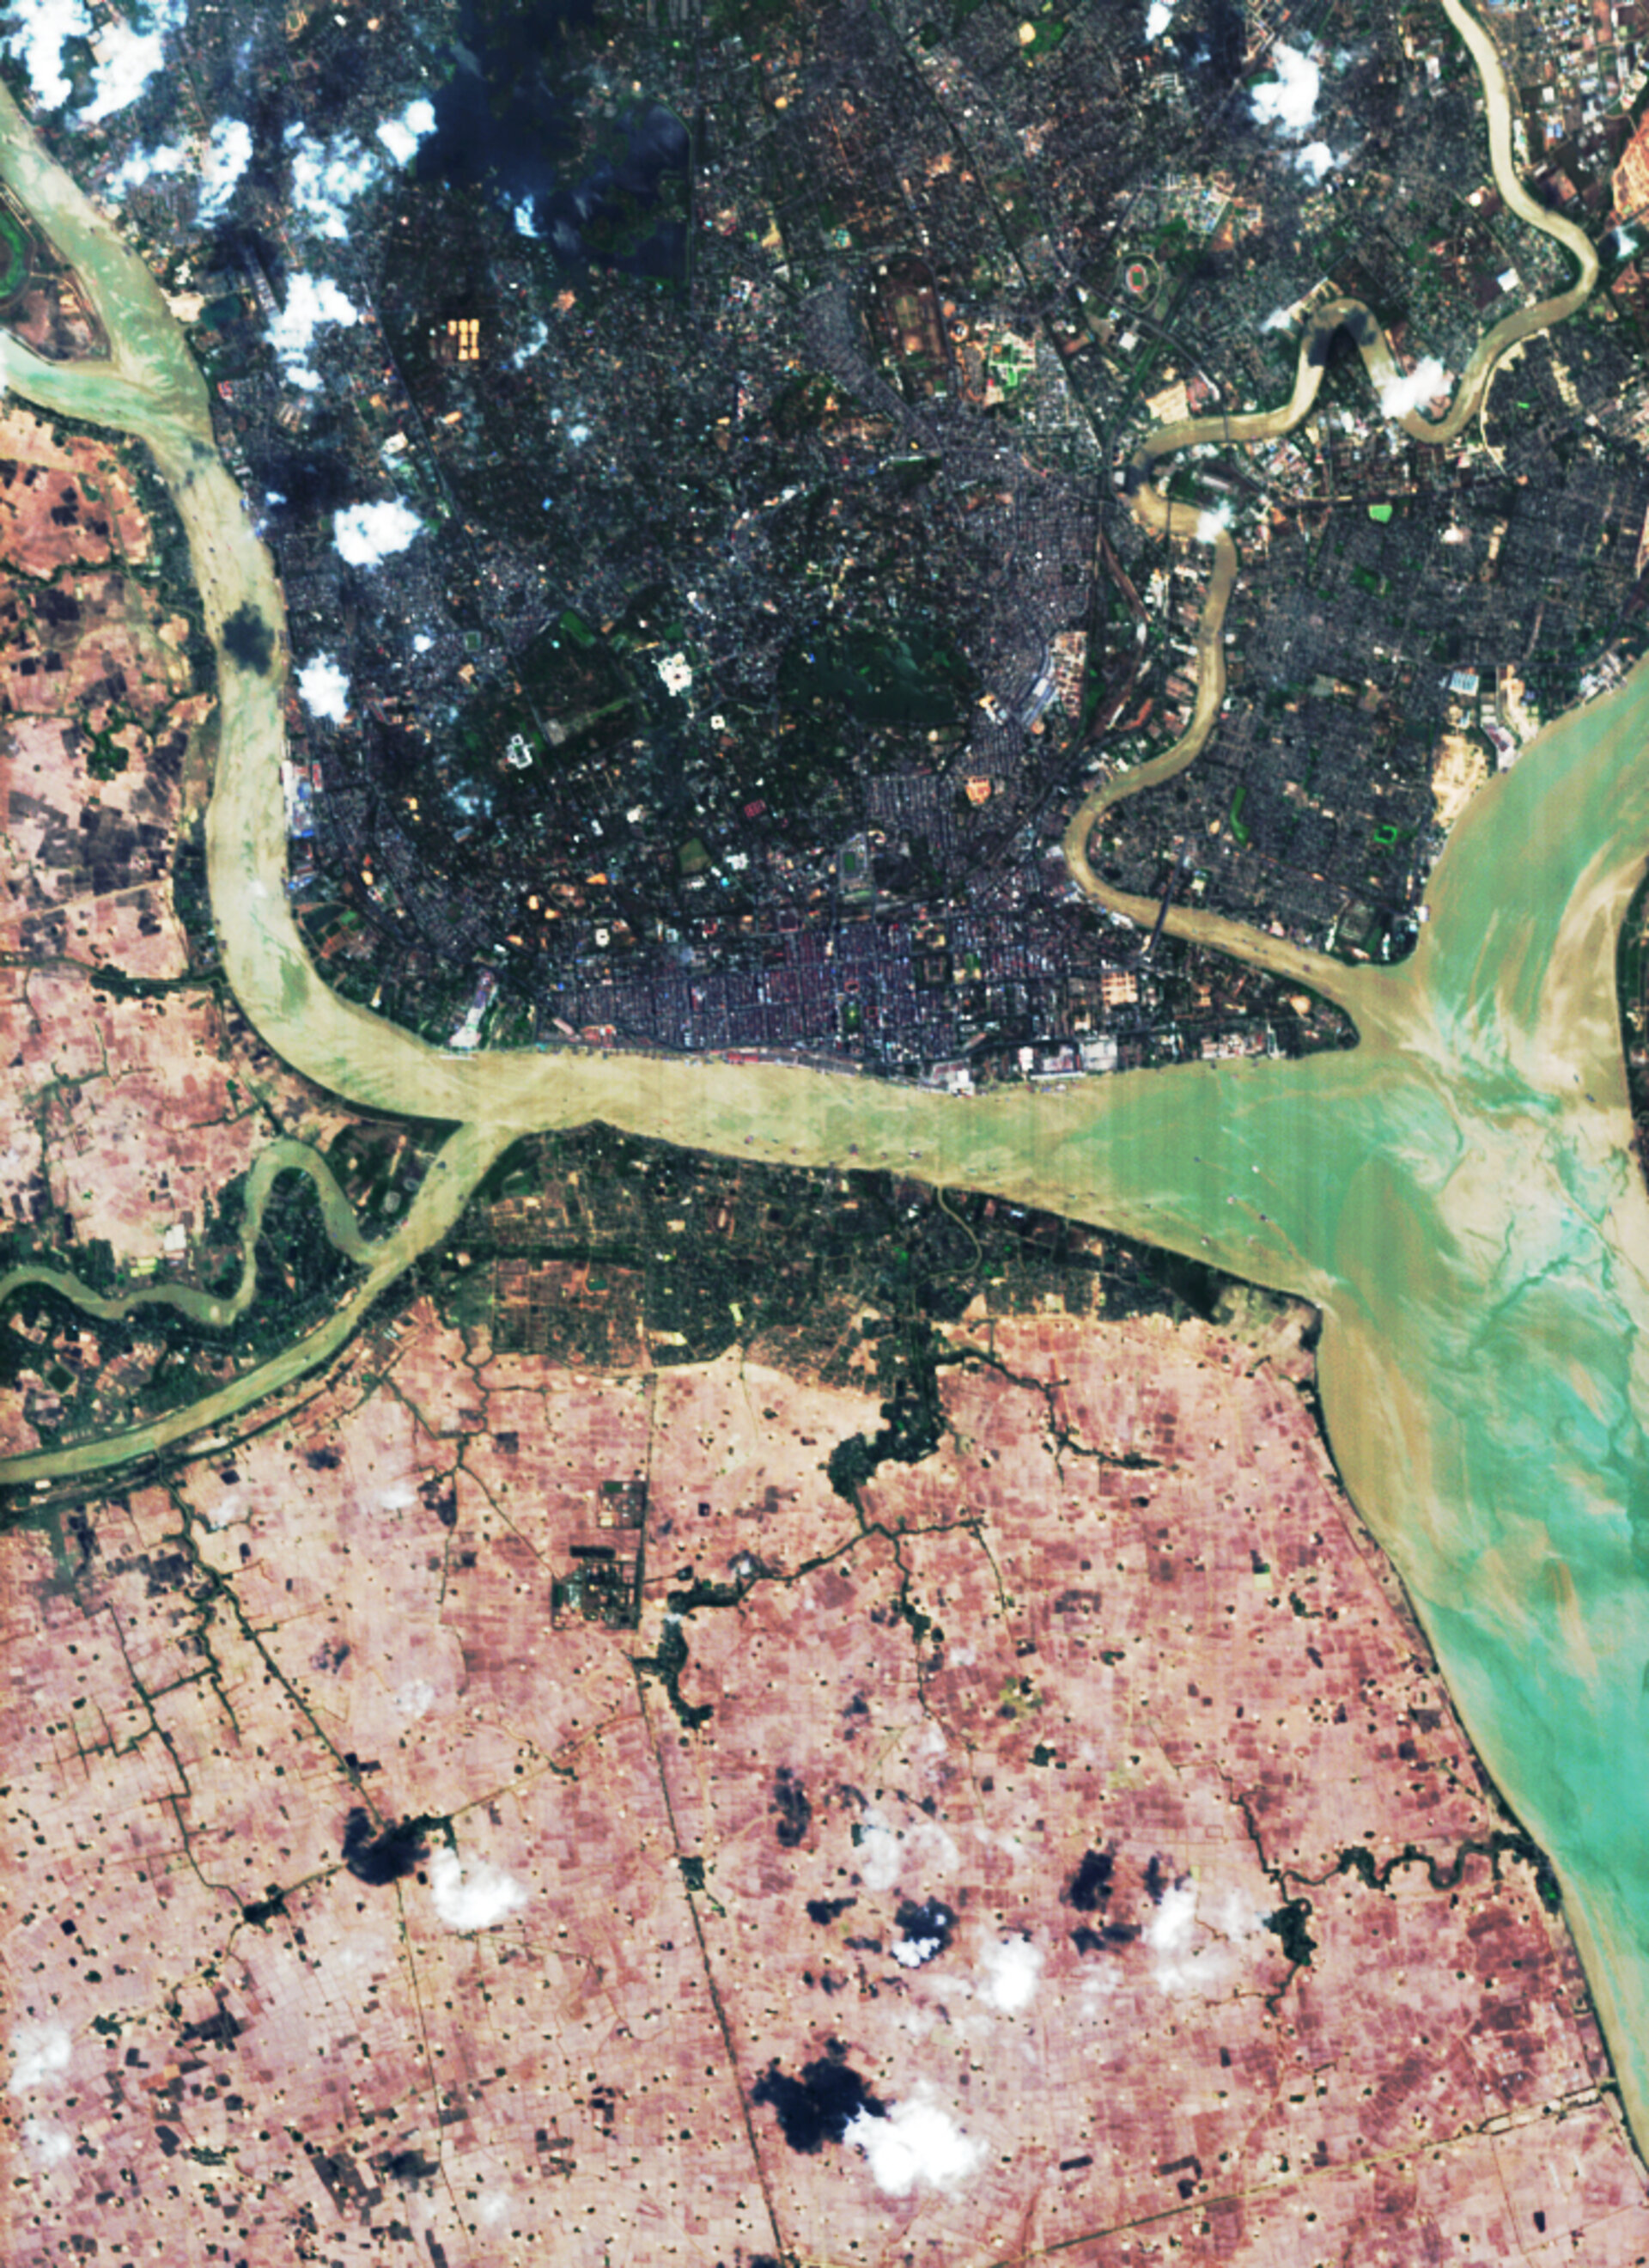 Yangon River in Myanmar (Burma)